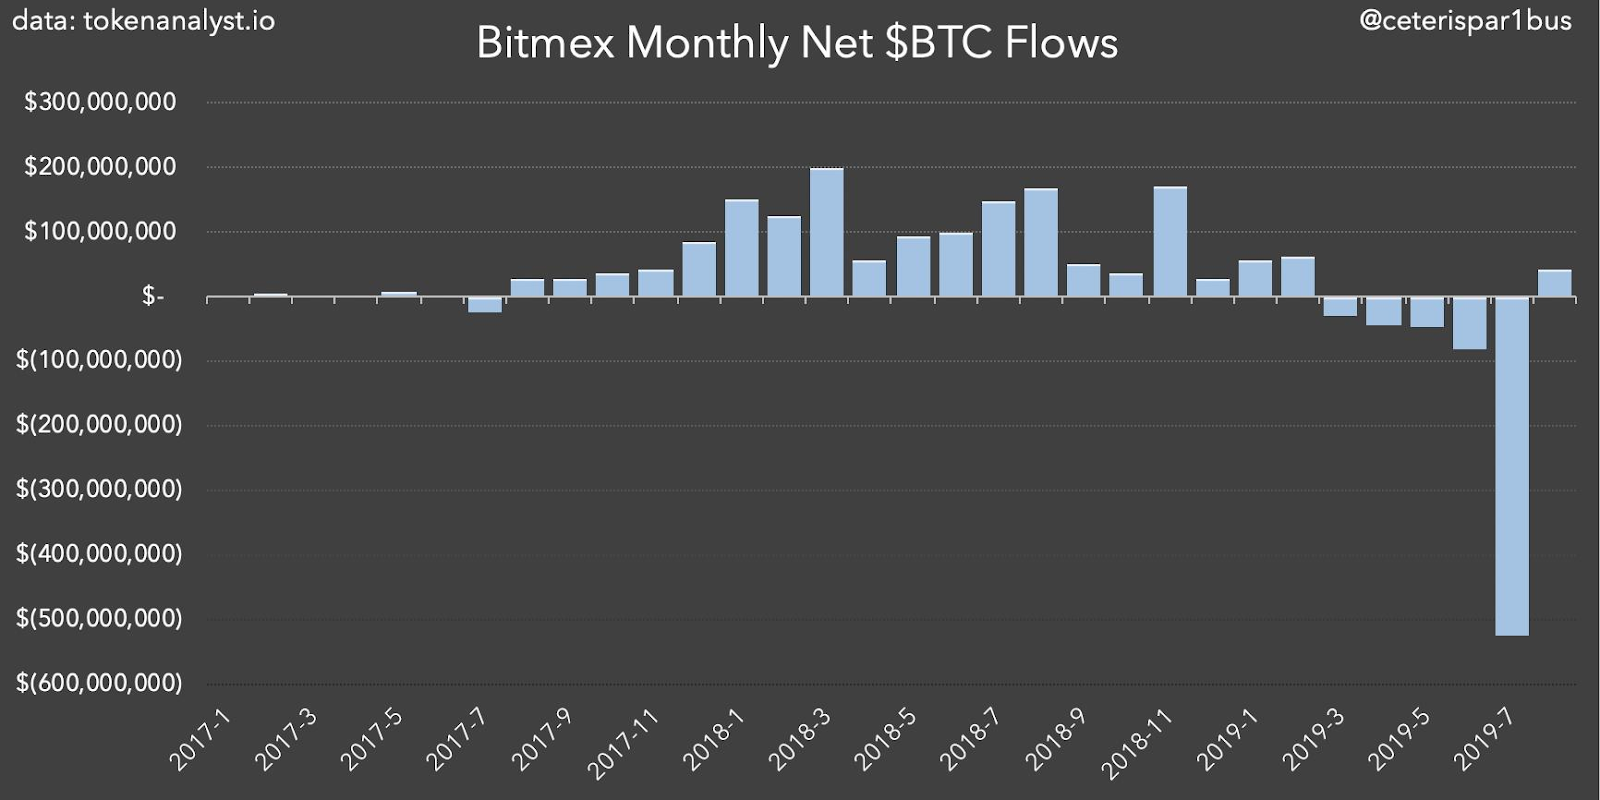 Bitmex monthly net Bitcoin flows